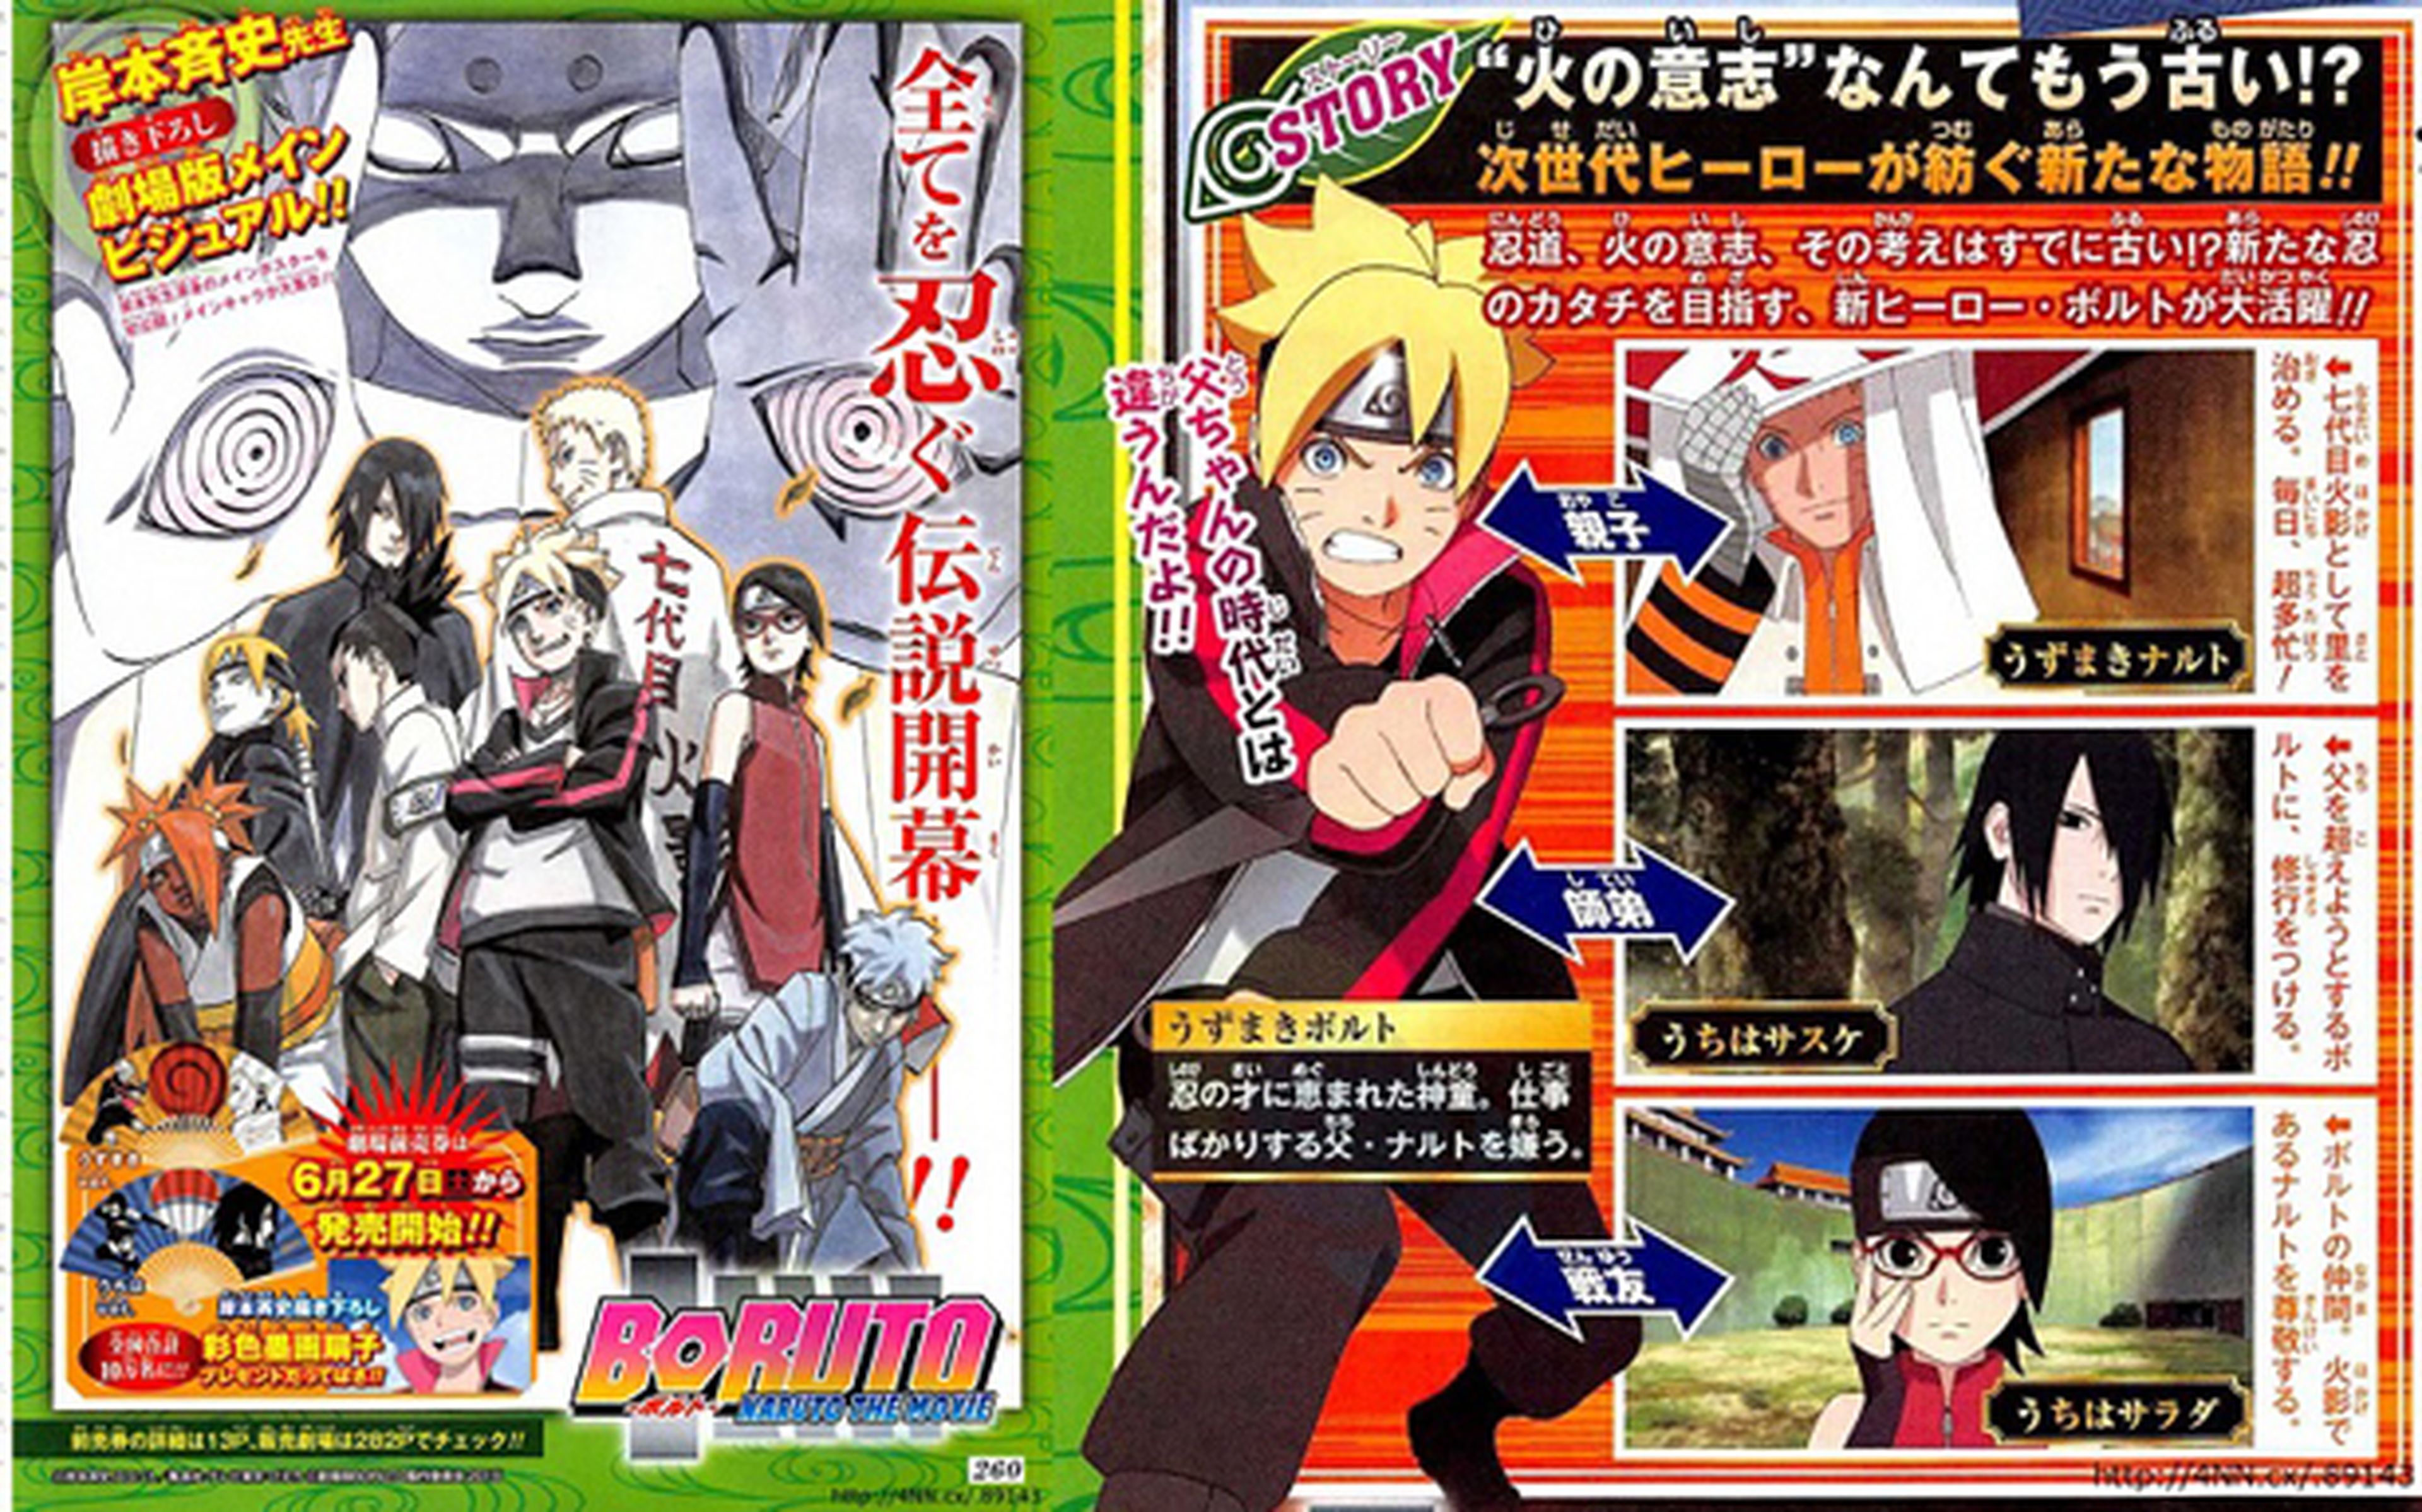 The new Boruto movie poster XD  Jeux naruto, Naruto shippuden, Naruto